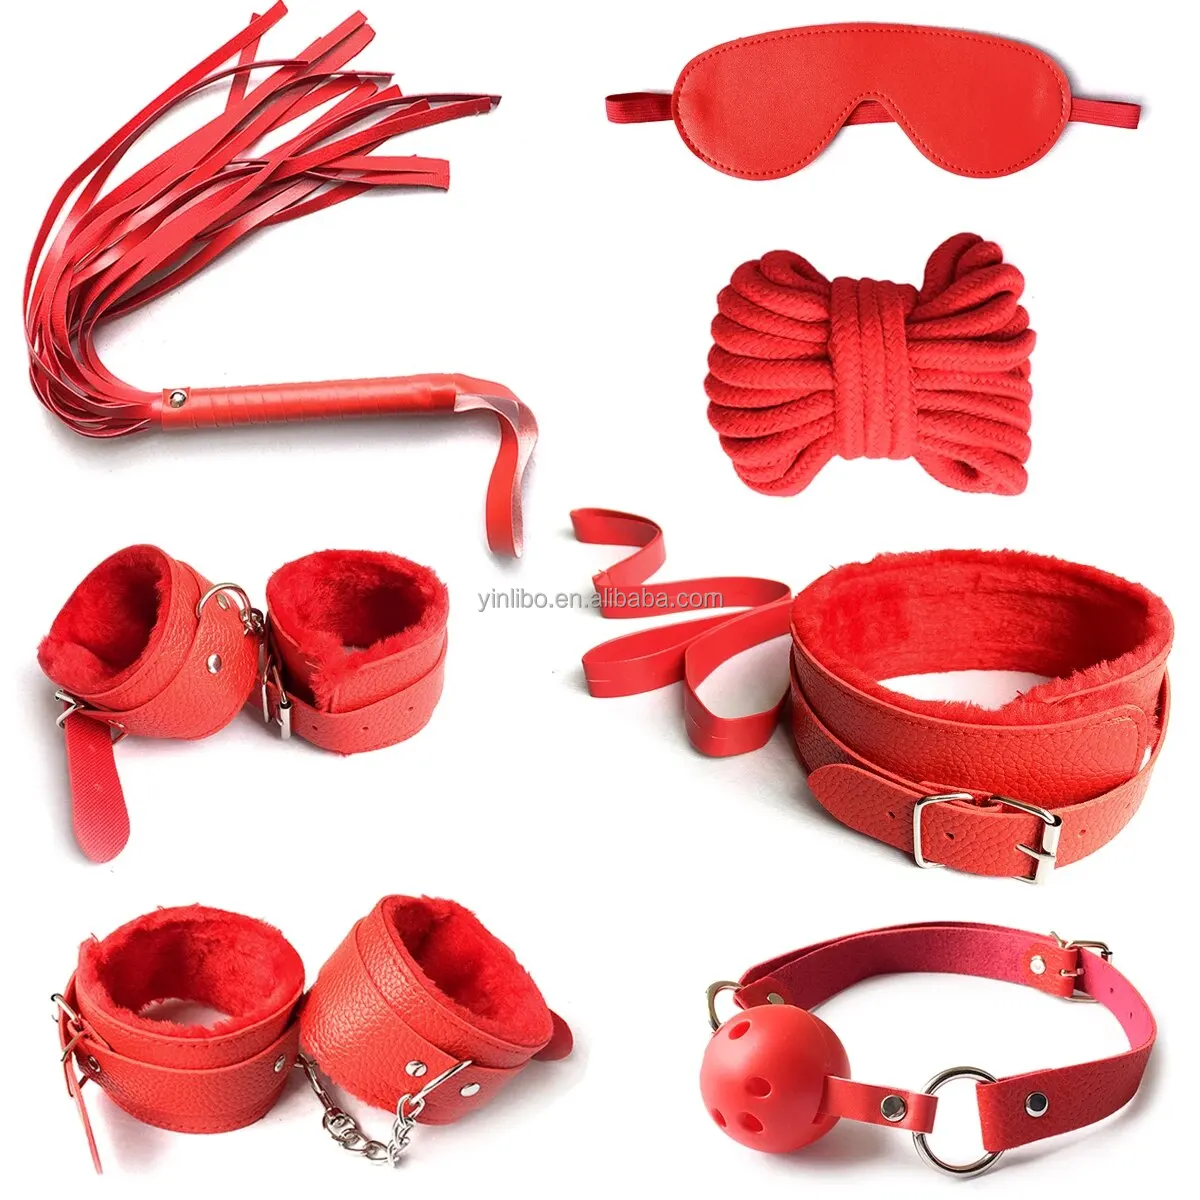 

7pcs/set High-Qulity Bdsm Bed Bondage Handcuffs Collar Gag Erotic Kits Genuine Leather Restraint SetSex Toys For Women Couples